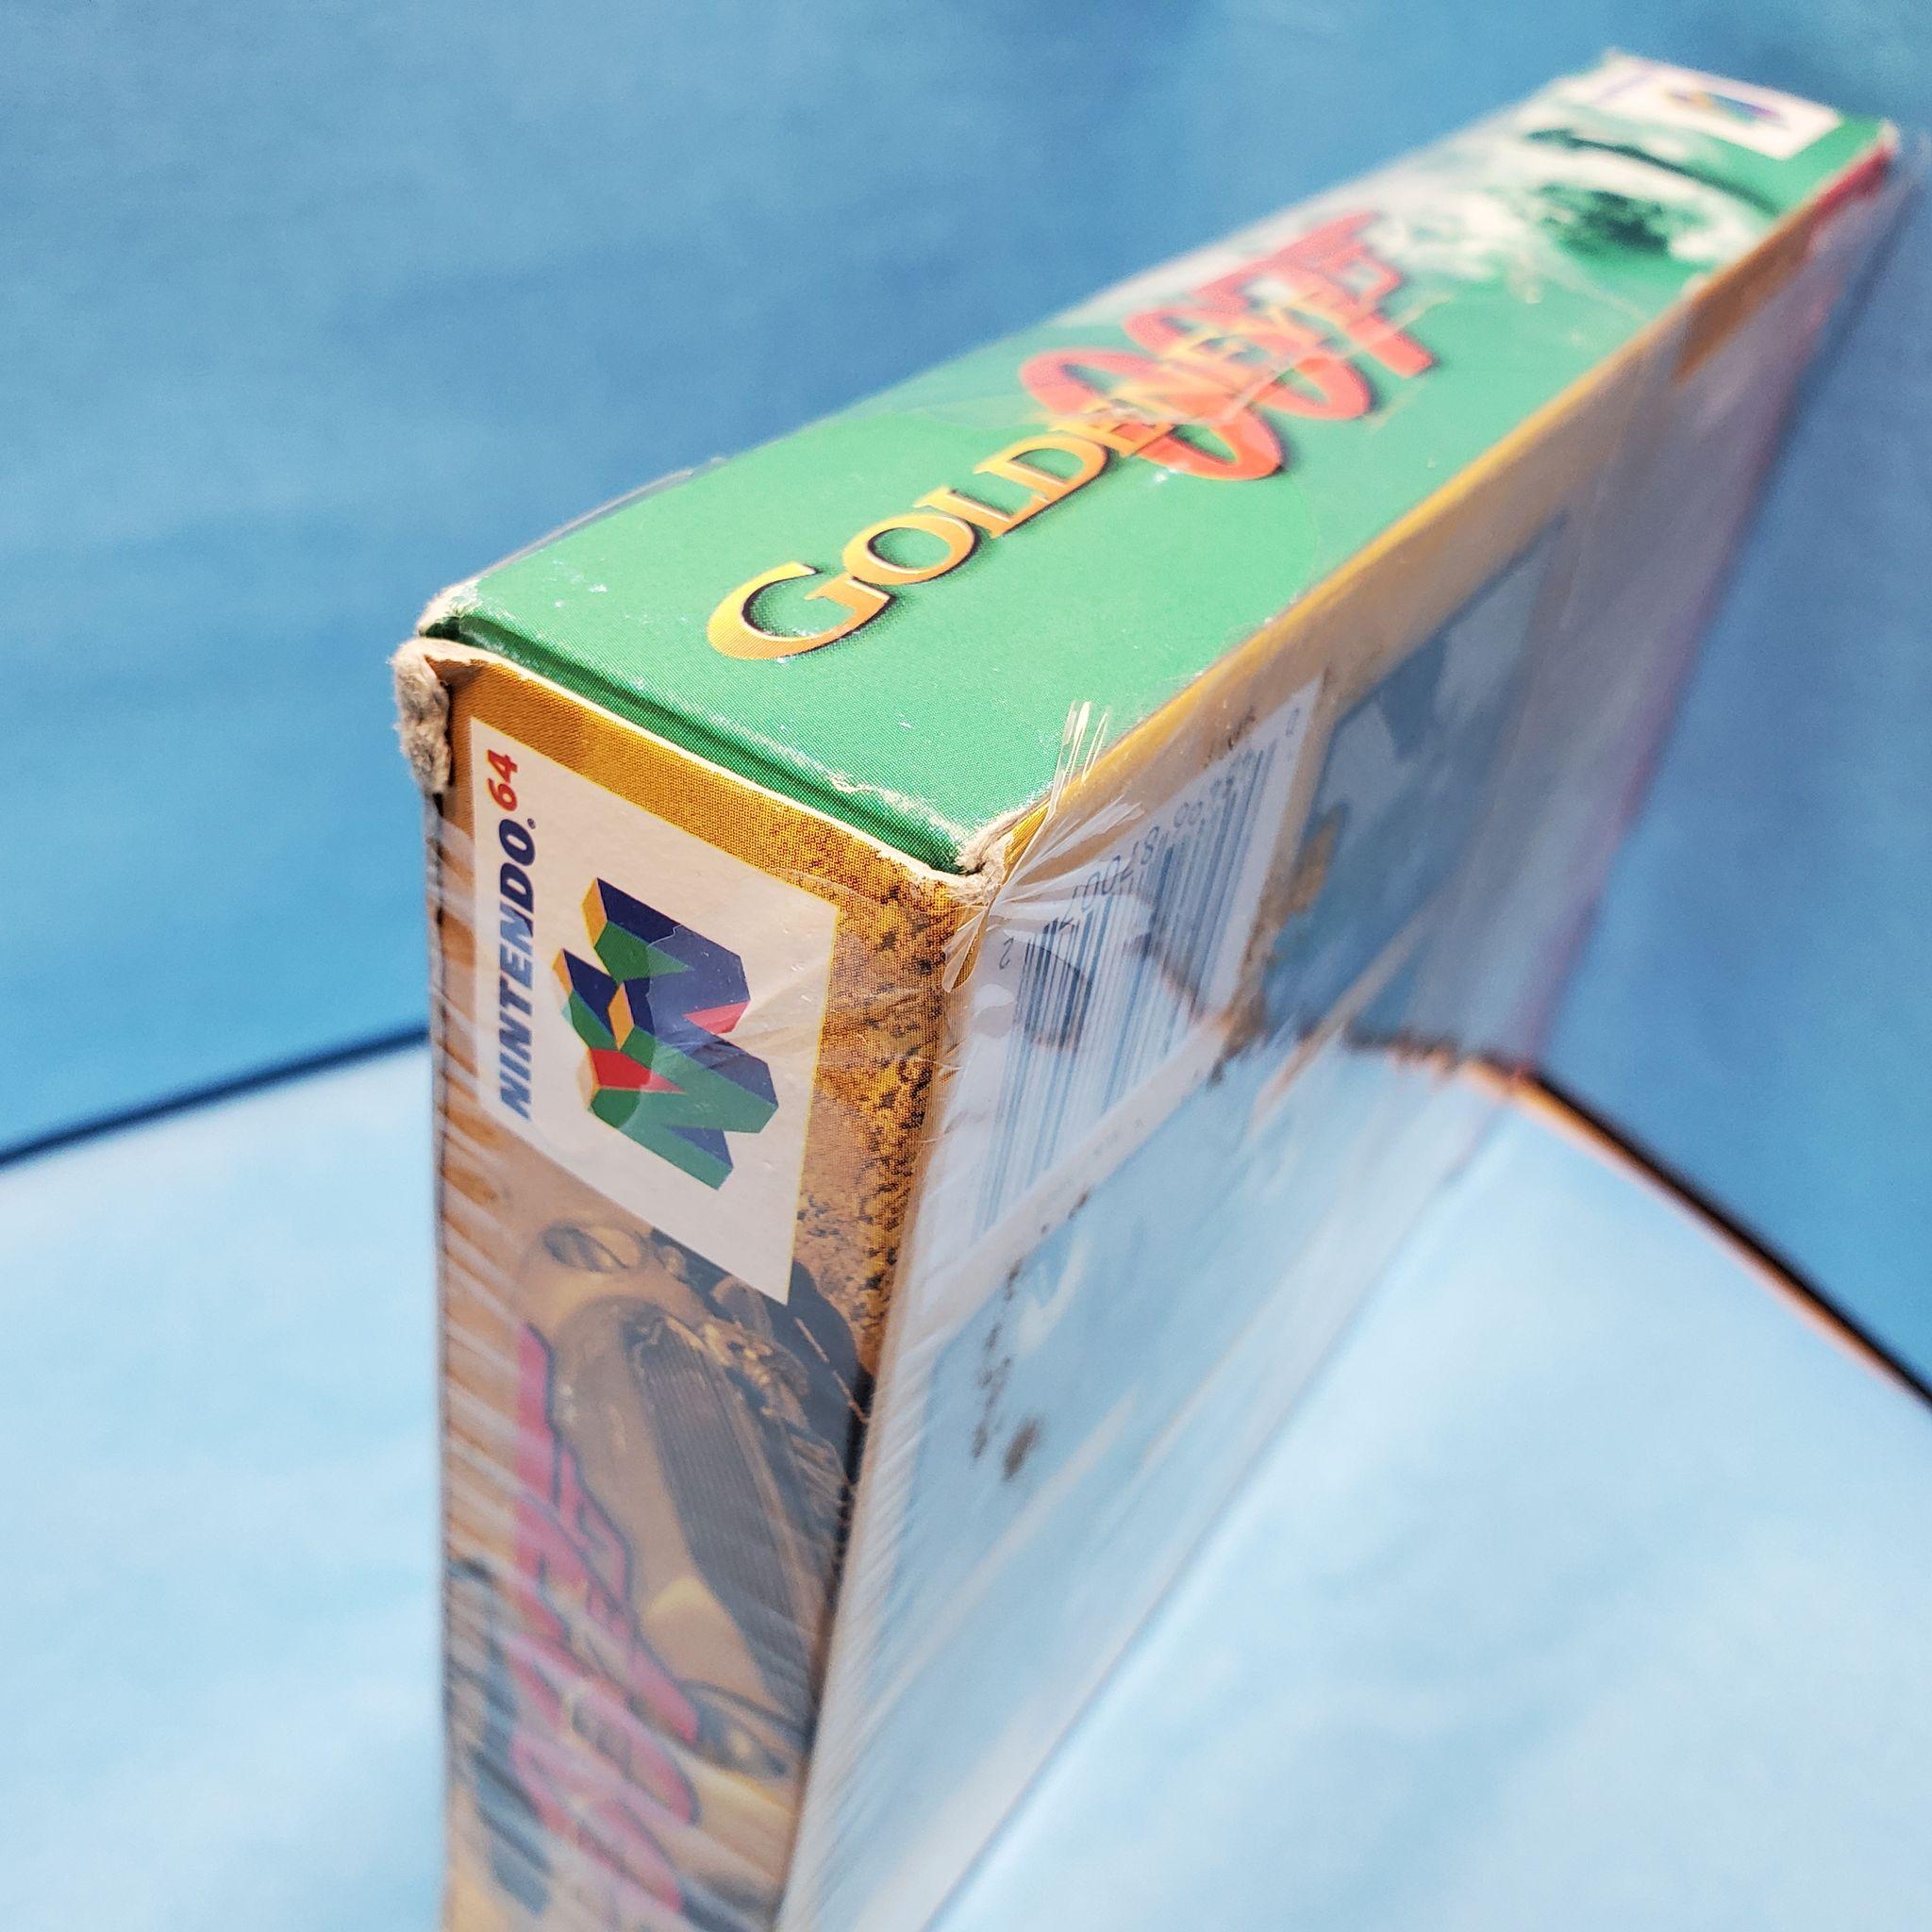 N64 - GoldenEye 007 (Sealed in Box / Damaged Seal)